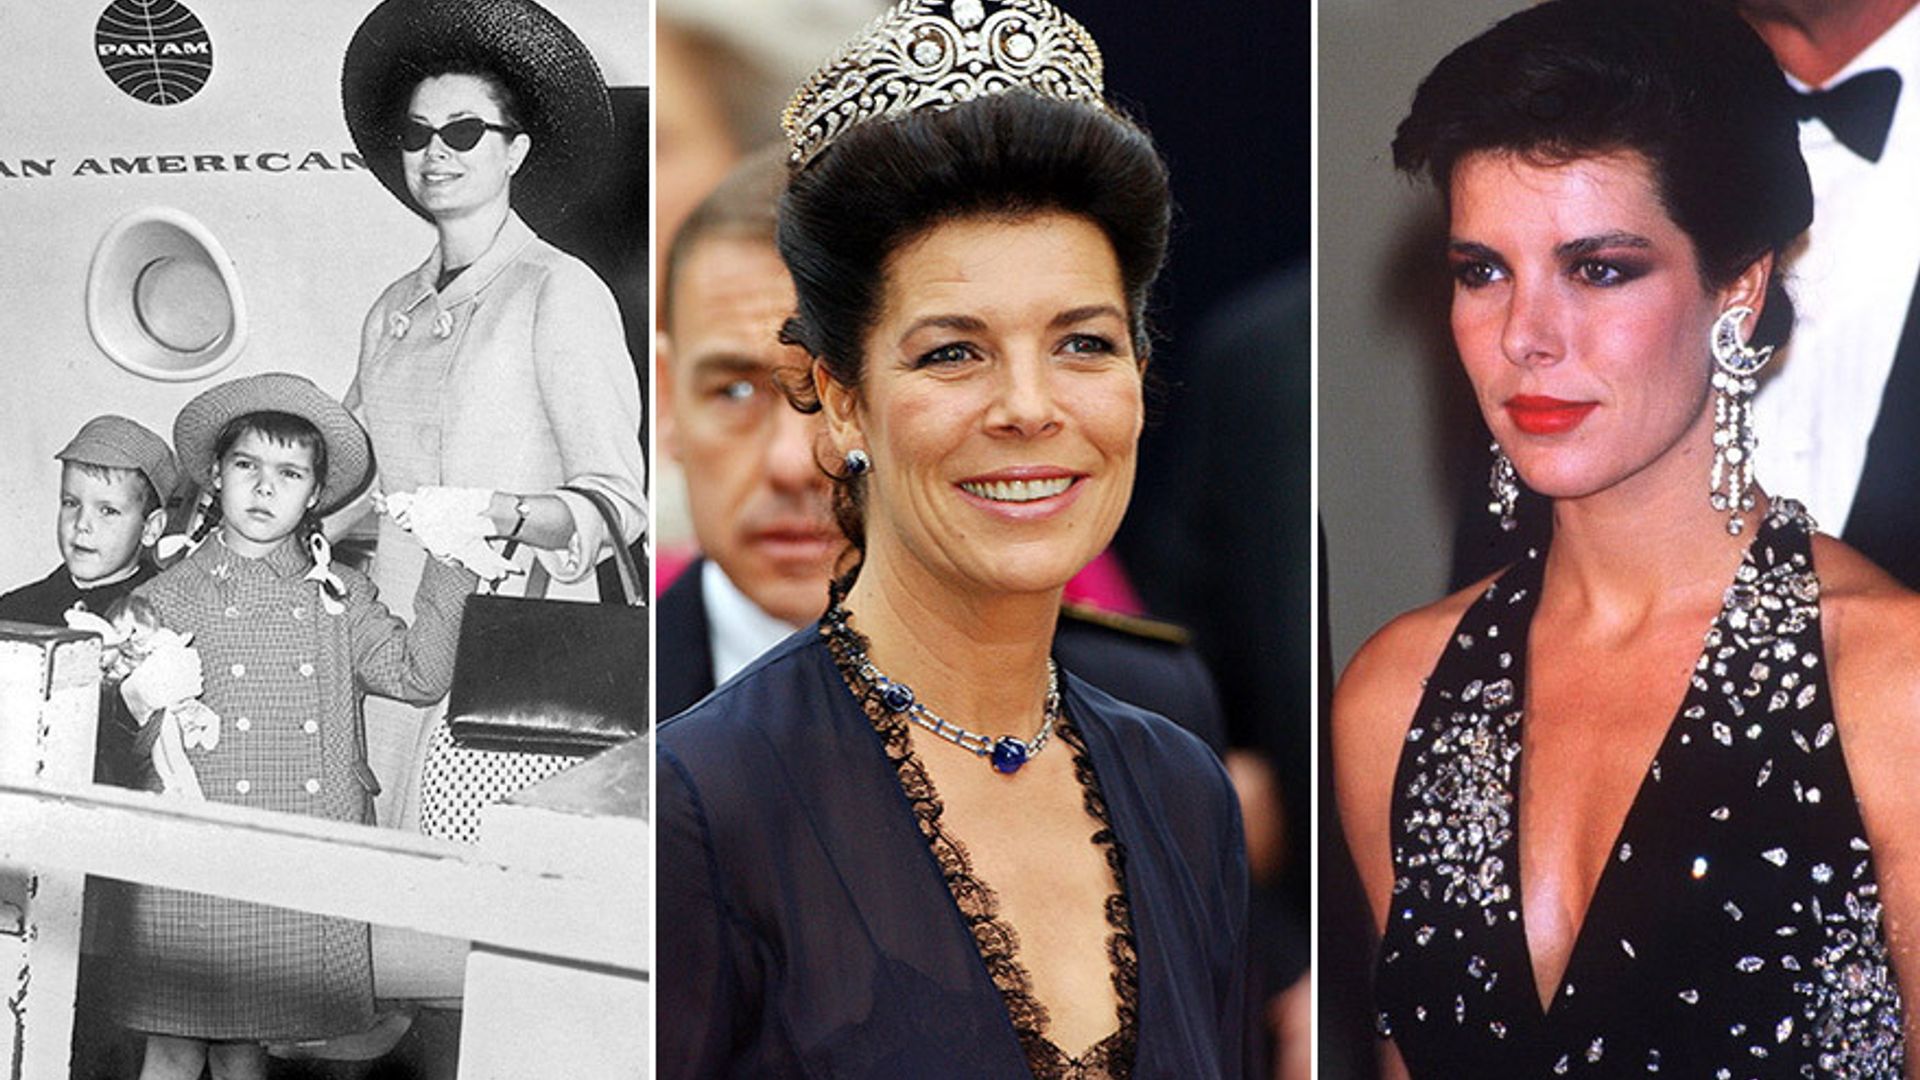 Princess Caroline: A look back at Princess Grace of Monaco's daughter through the years